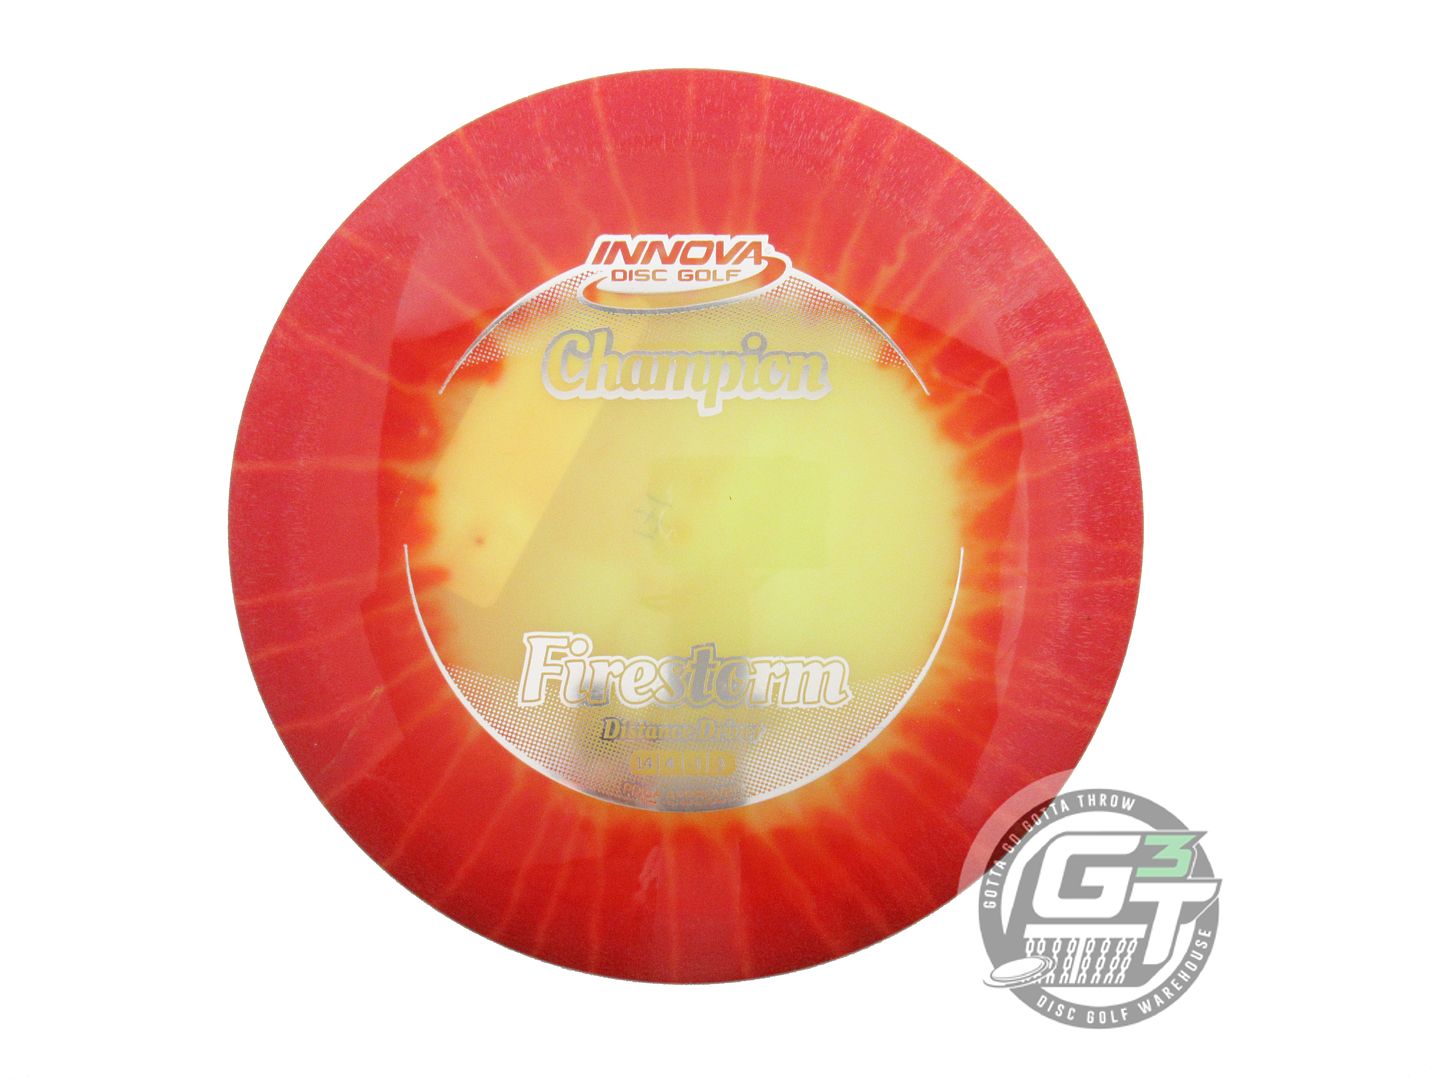 Innova I-Dye Champion Firestorm Distance Driver Golf Disc (Individually Listed)